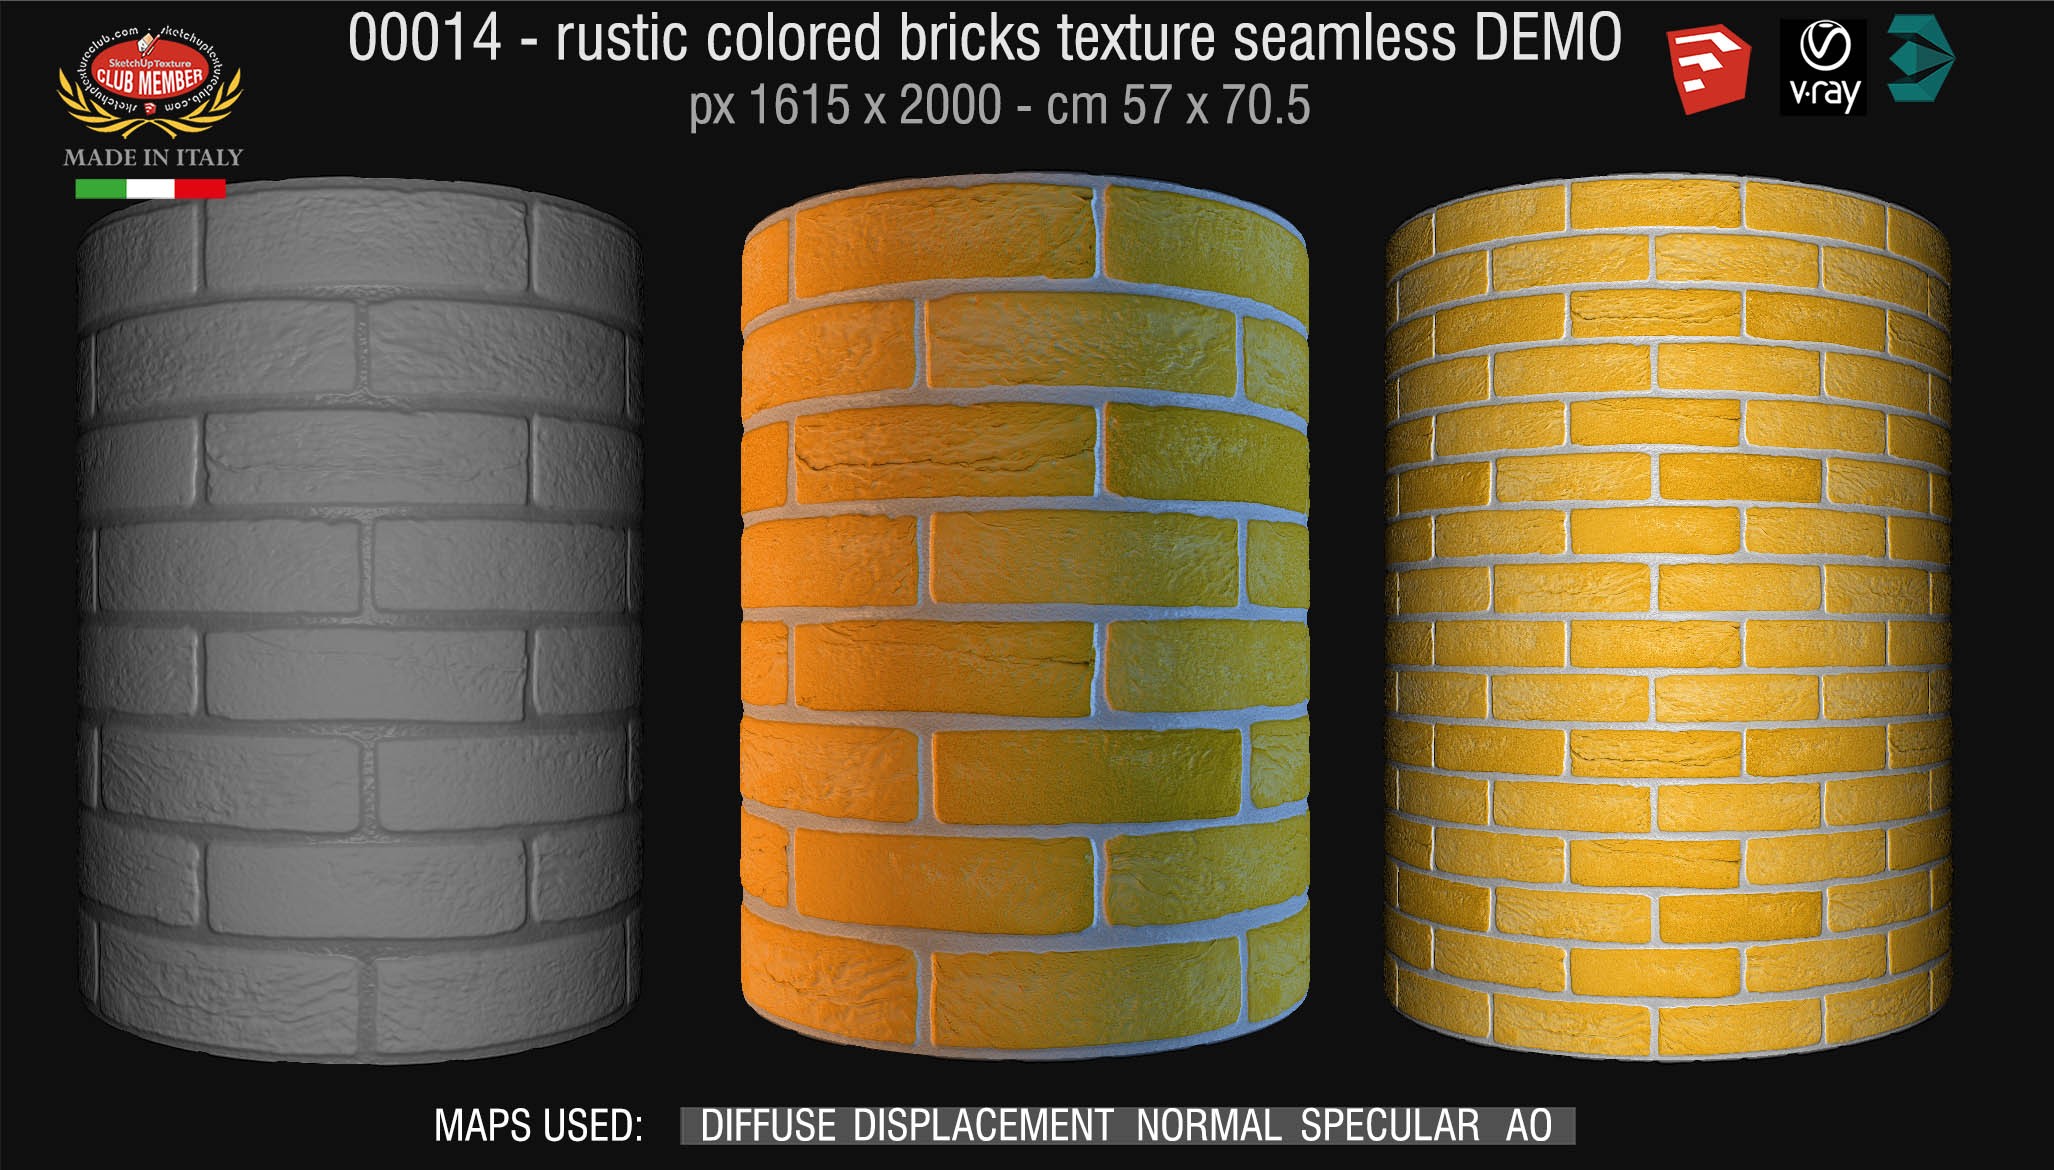 00014 colored rustic bricks texture seamless + maps DEMO